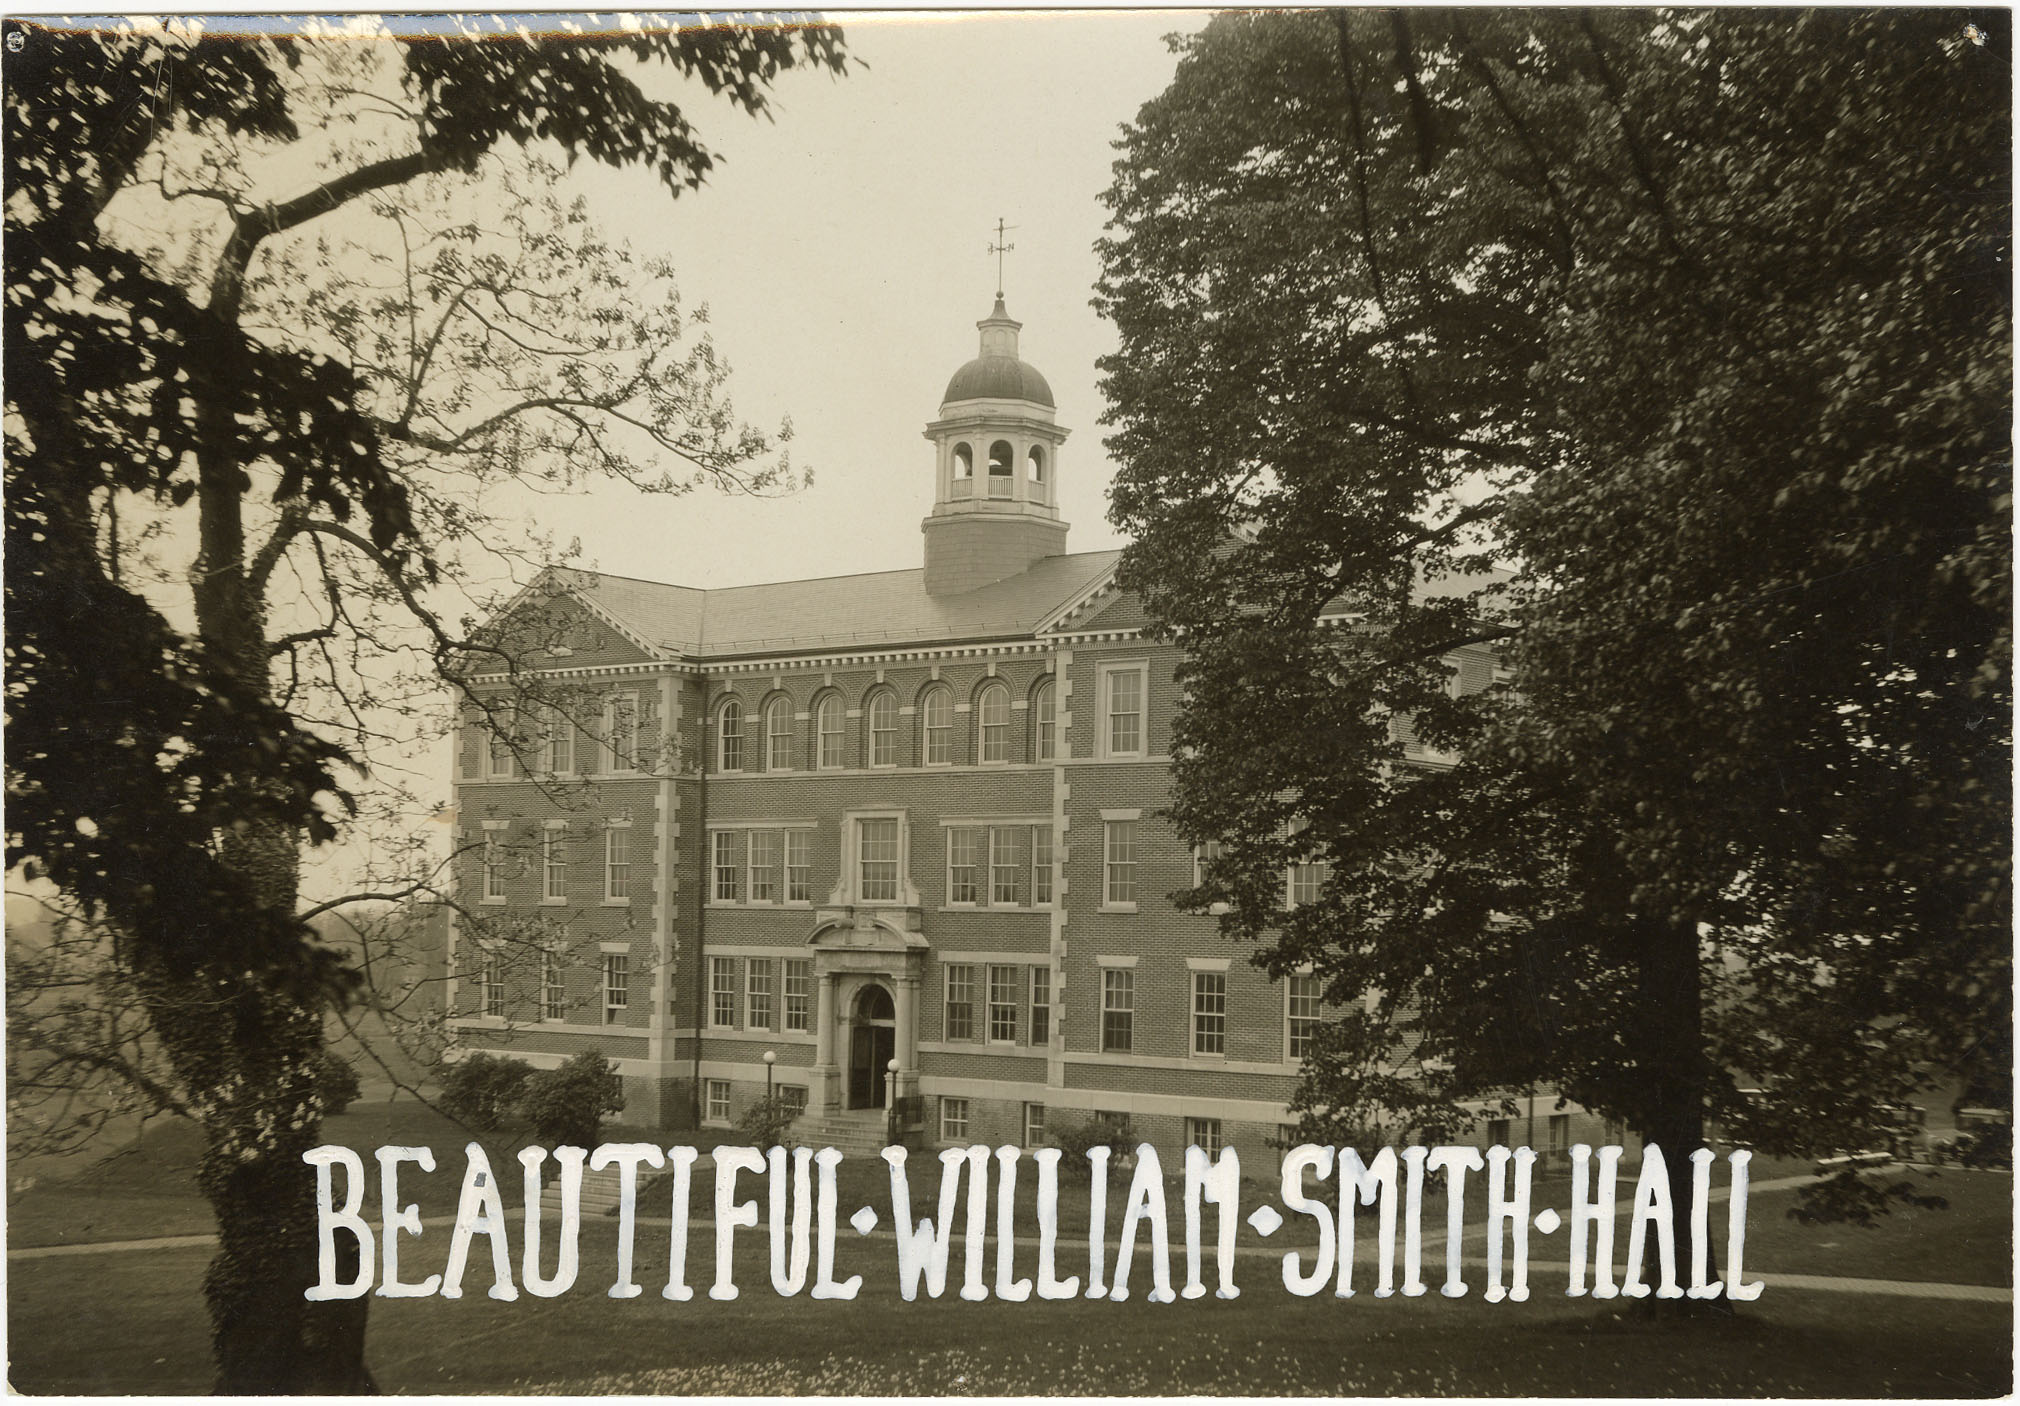 William Smith Hall